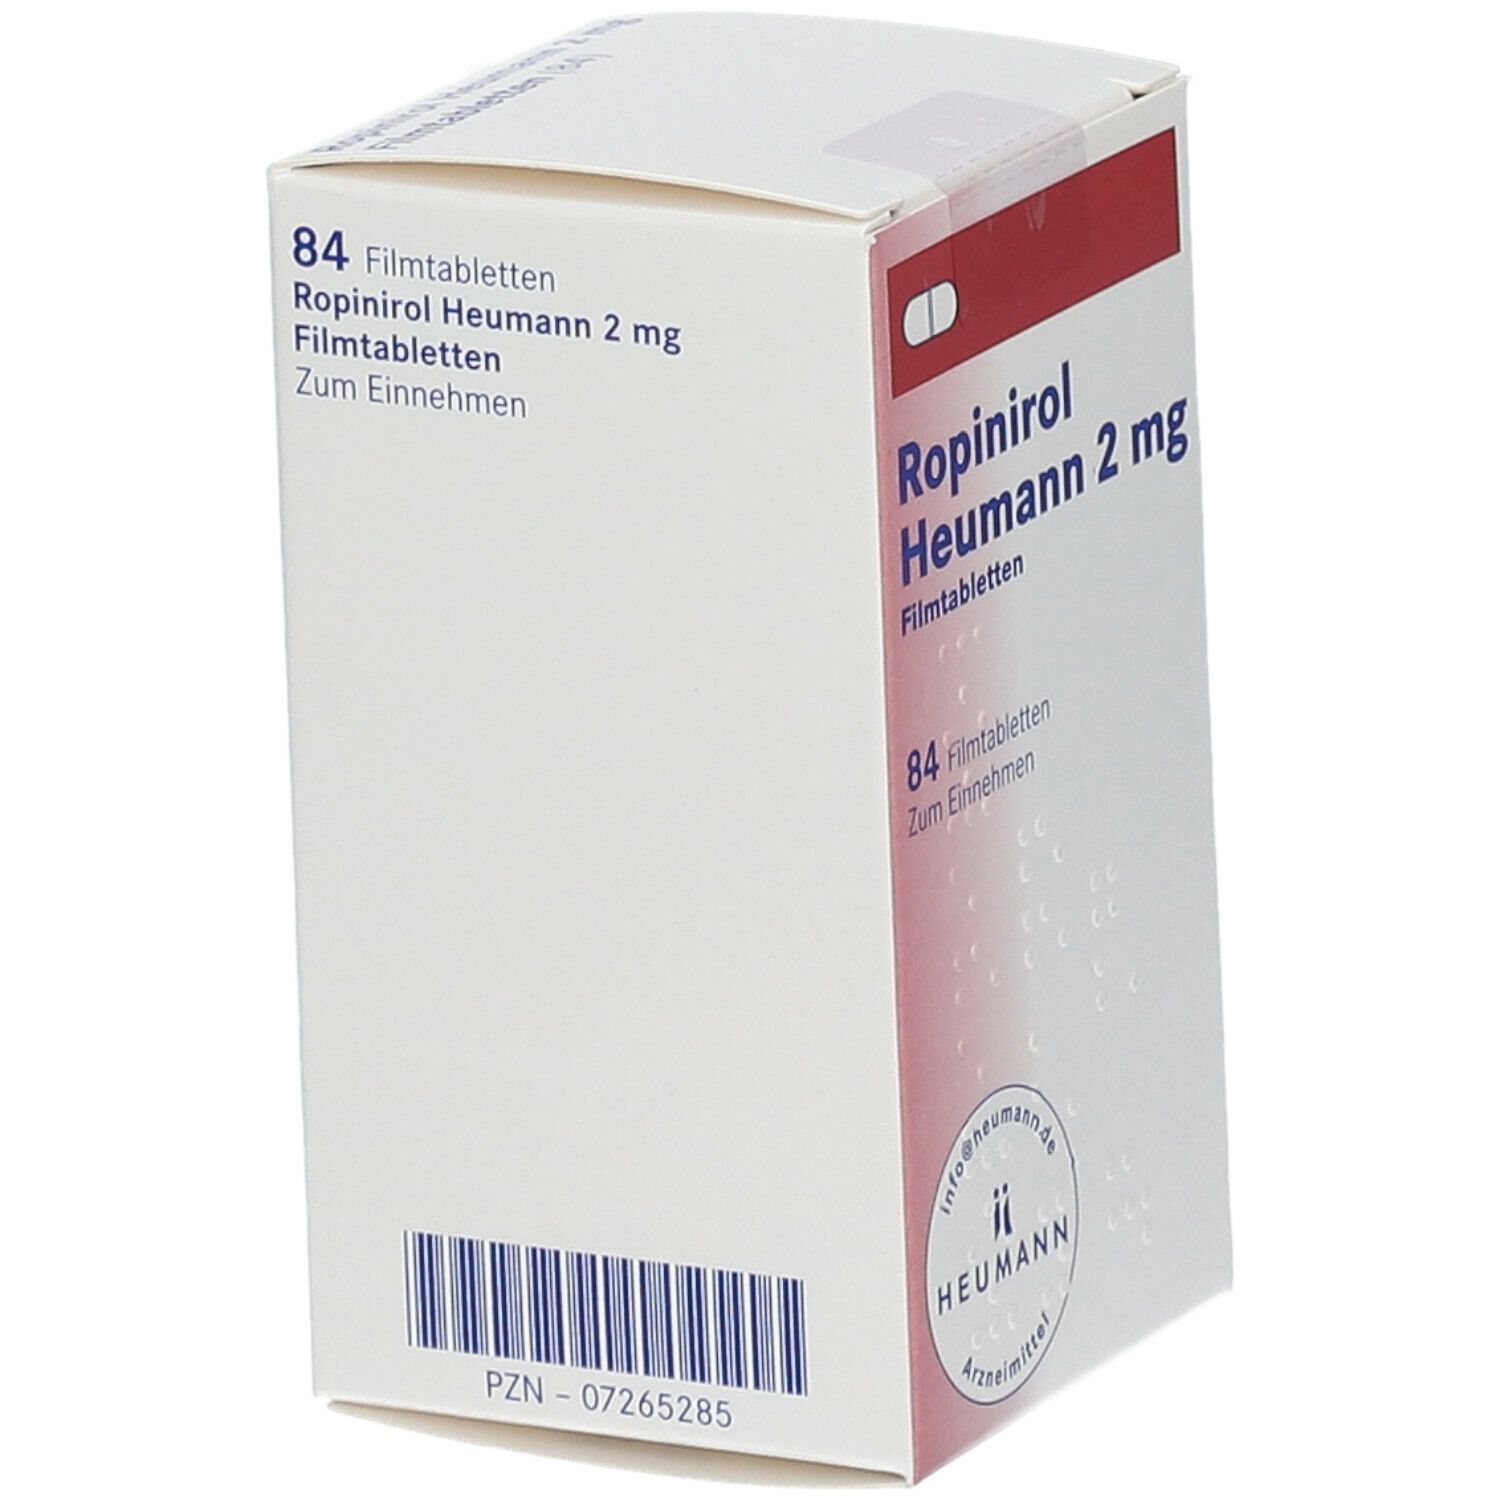 Ropinirol Heumann 2 mg